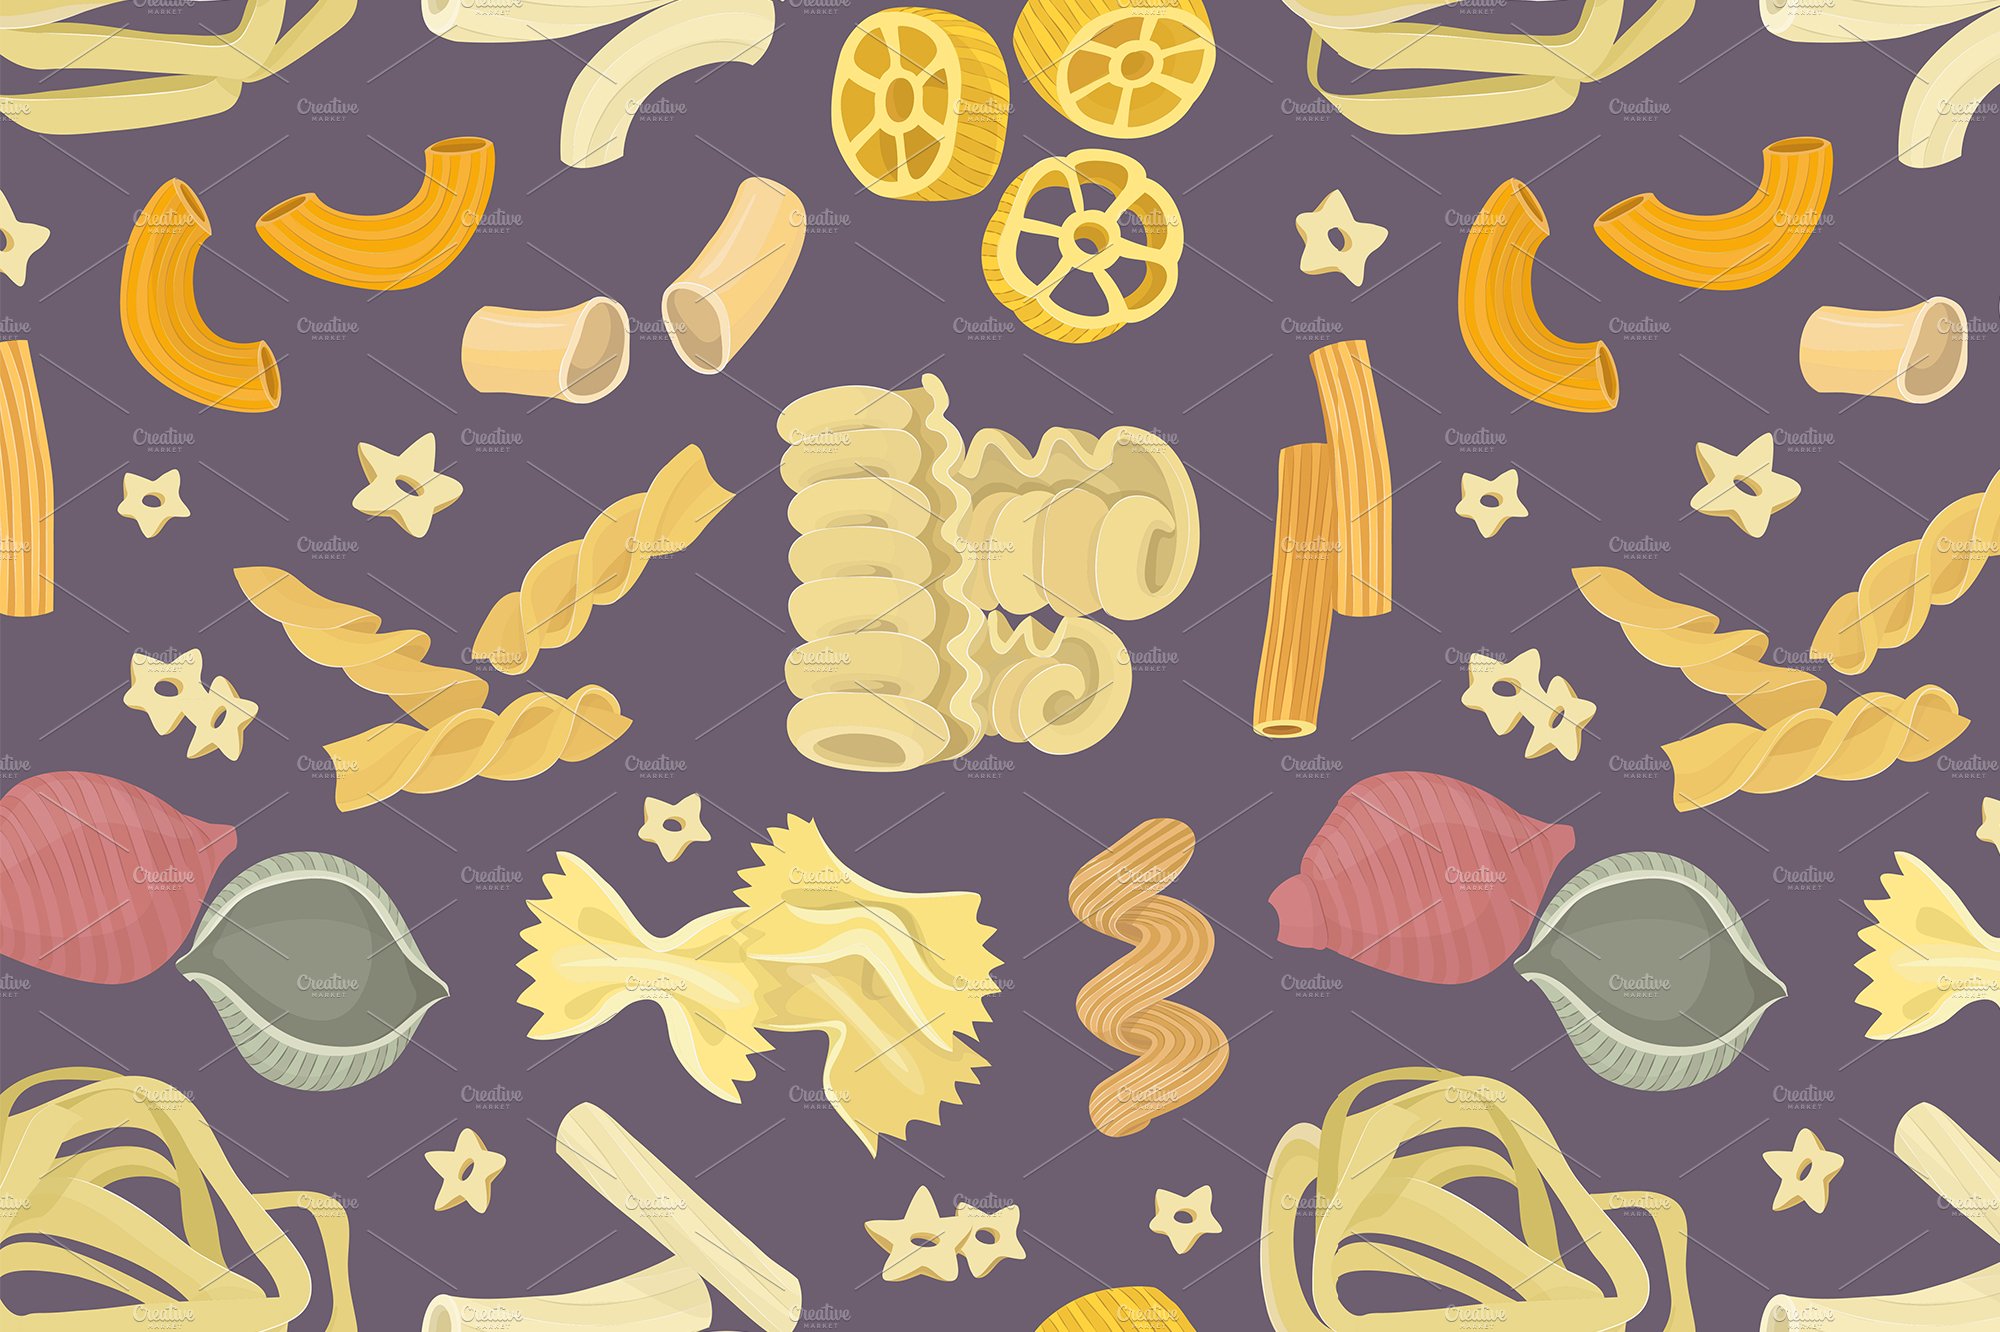 Italian pasta food set pattern cover image.